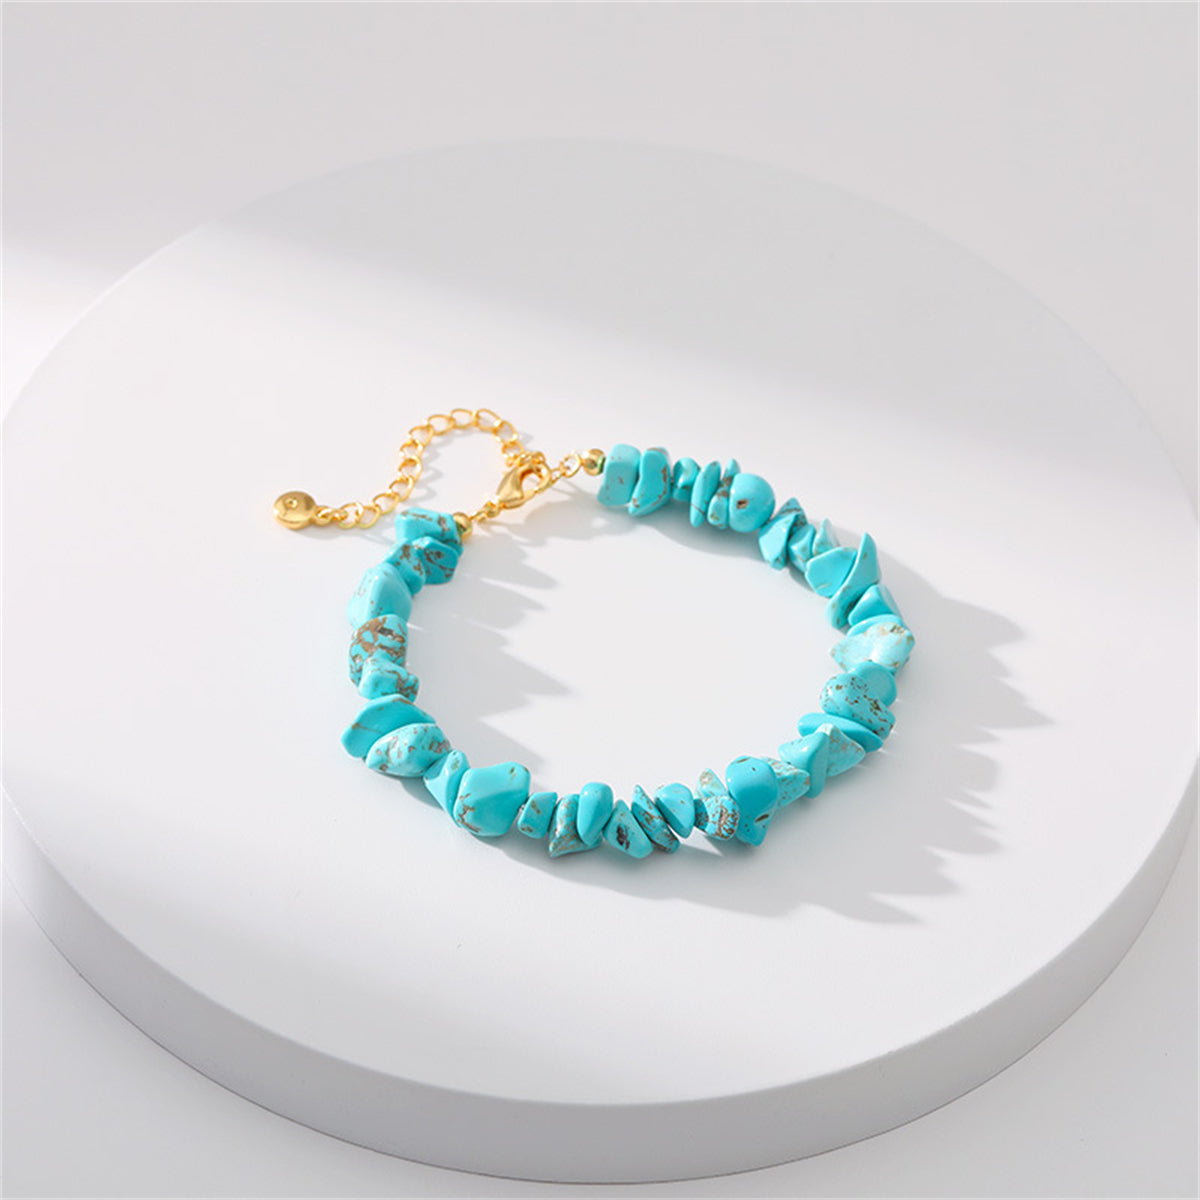 Turquoise Stone Chip Beaded Bracelet